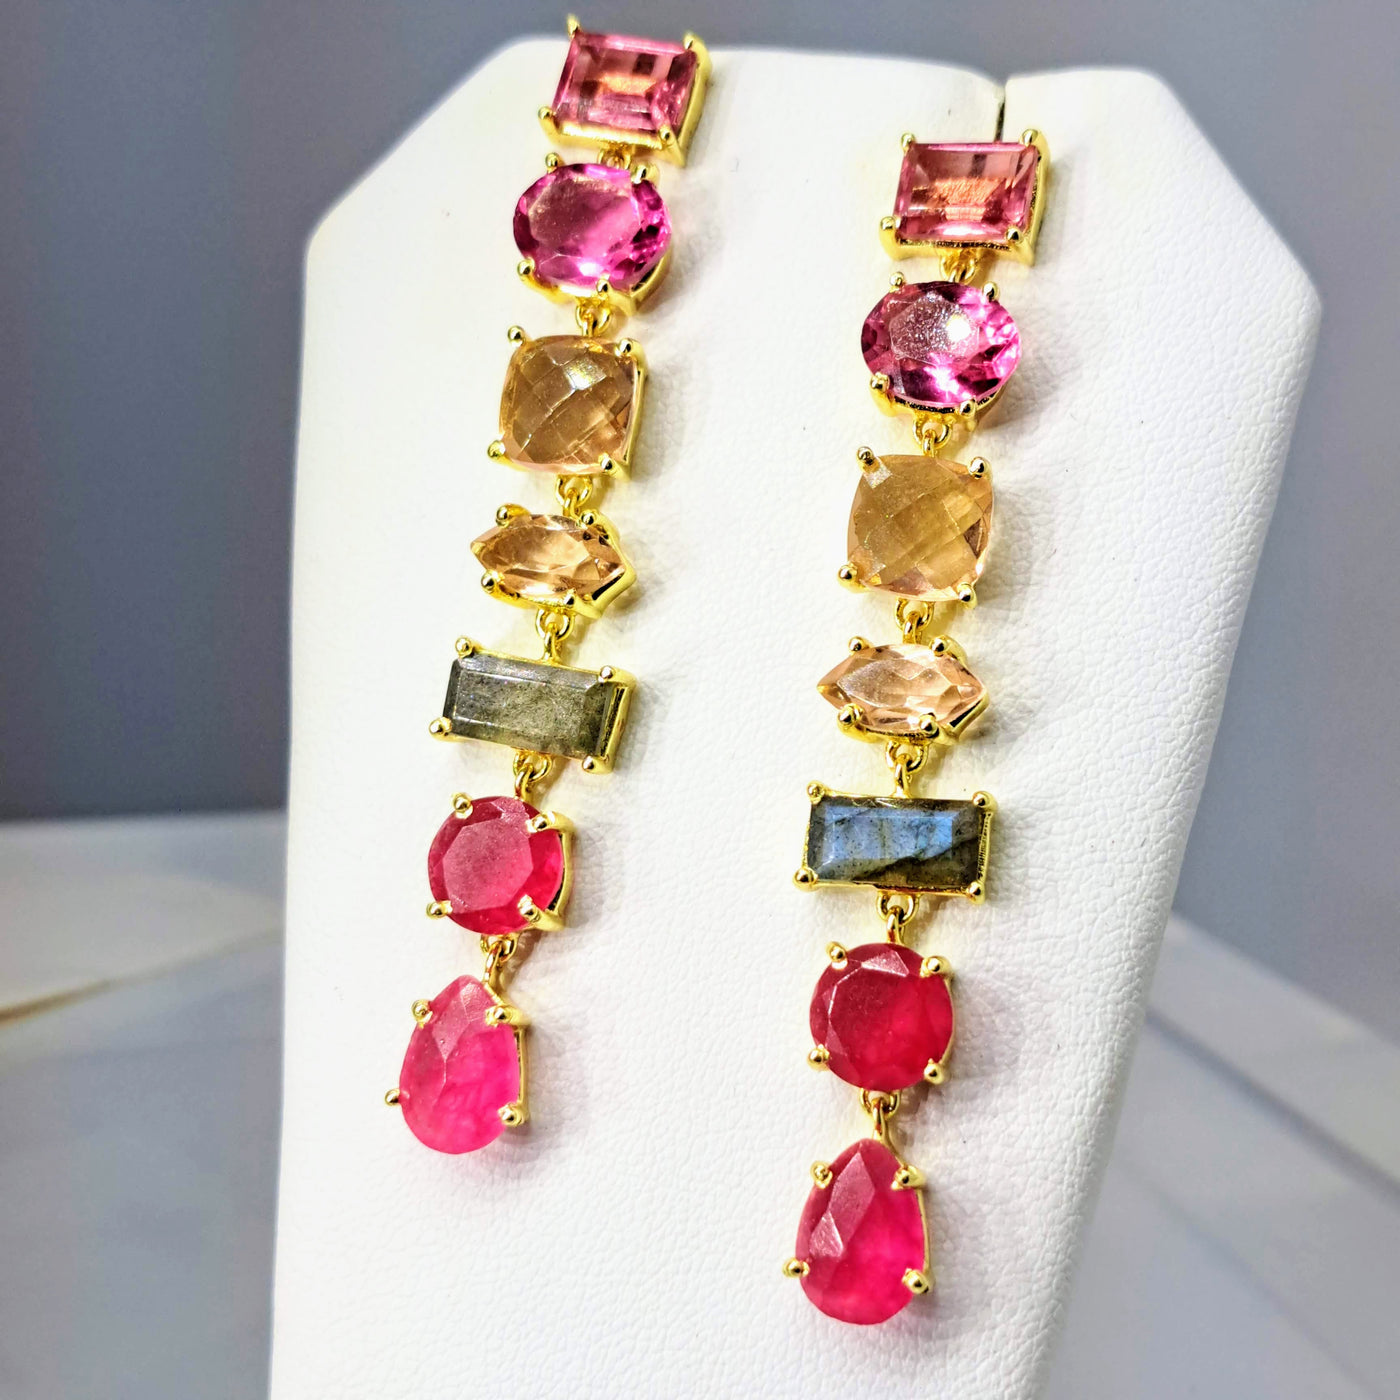 "PINK!" 2.5" Earrings - Pink Tourmaline, Topaz, Morganite, Labradorite, Ruby, 18k GPB